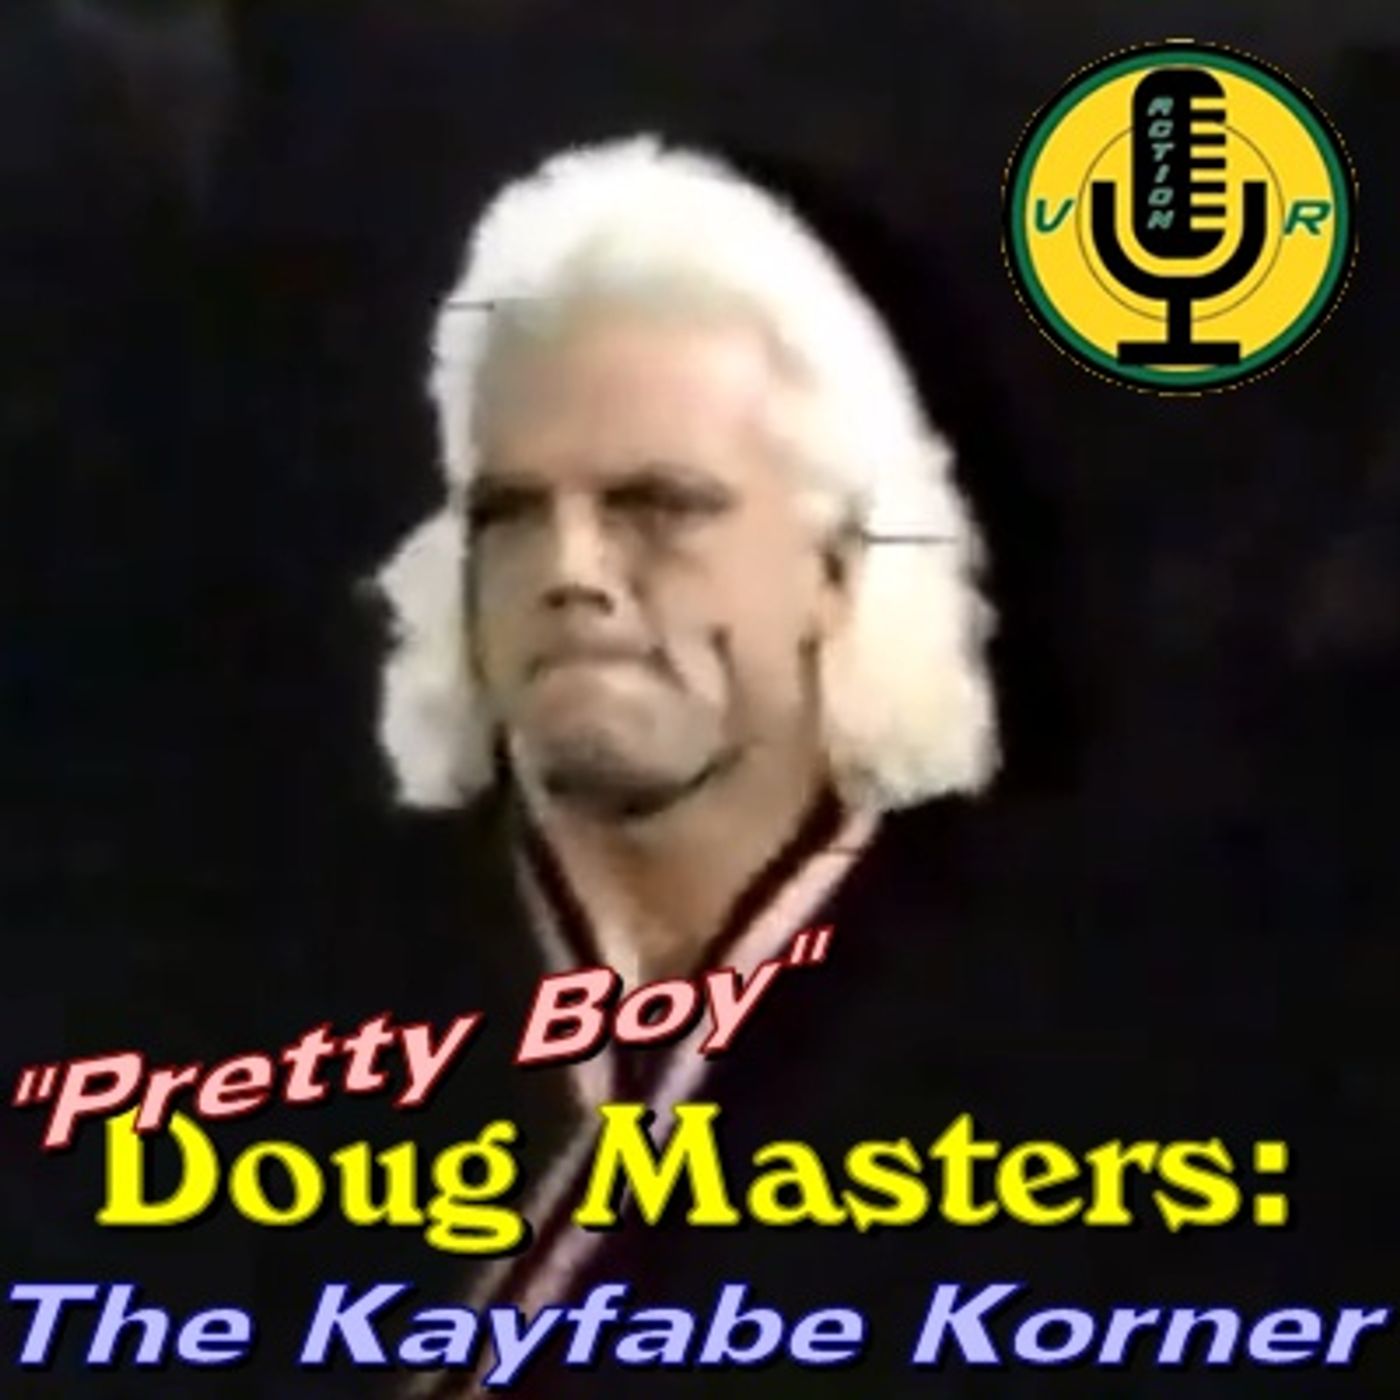 "Pretty Boy" Doug Masters: The Kayfabe Korner